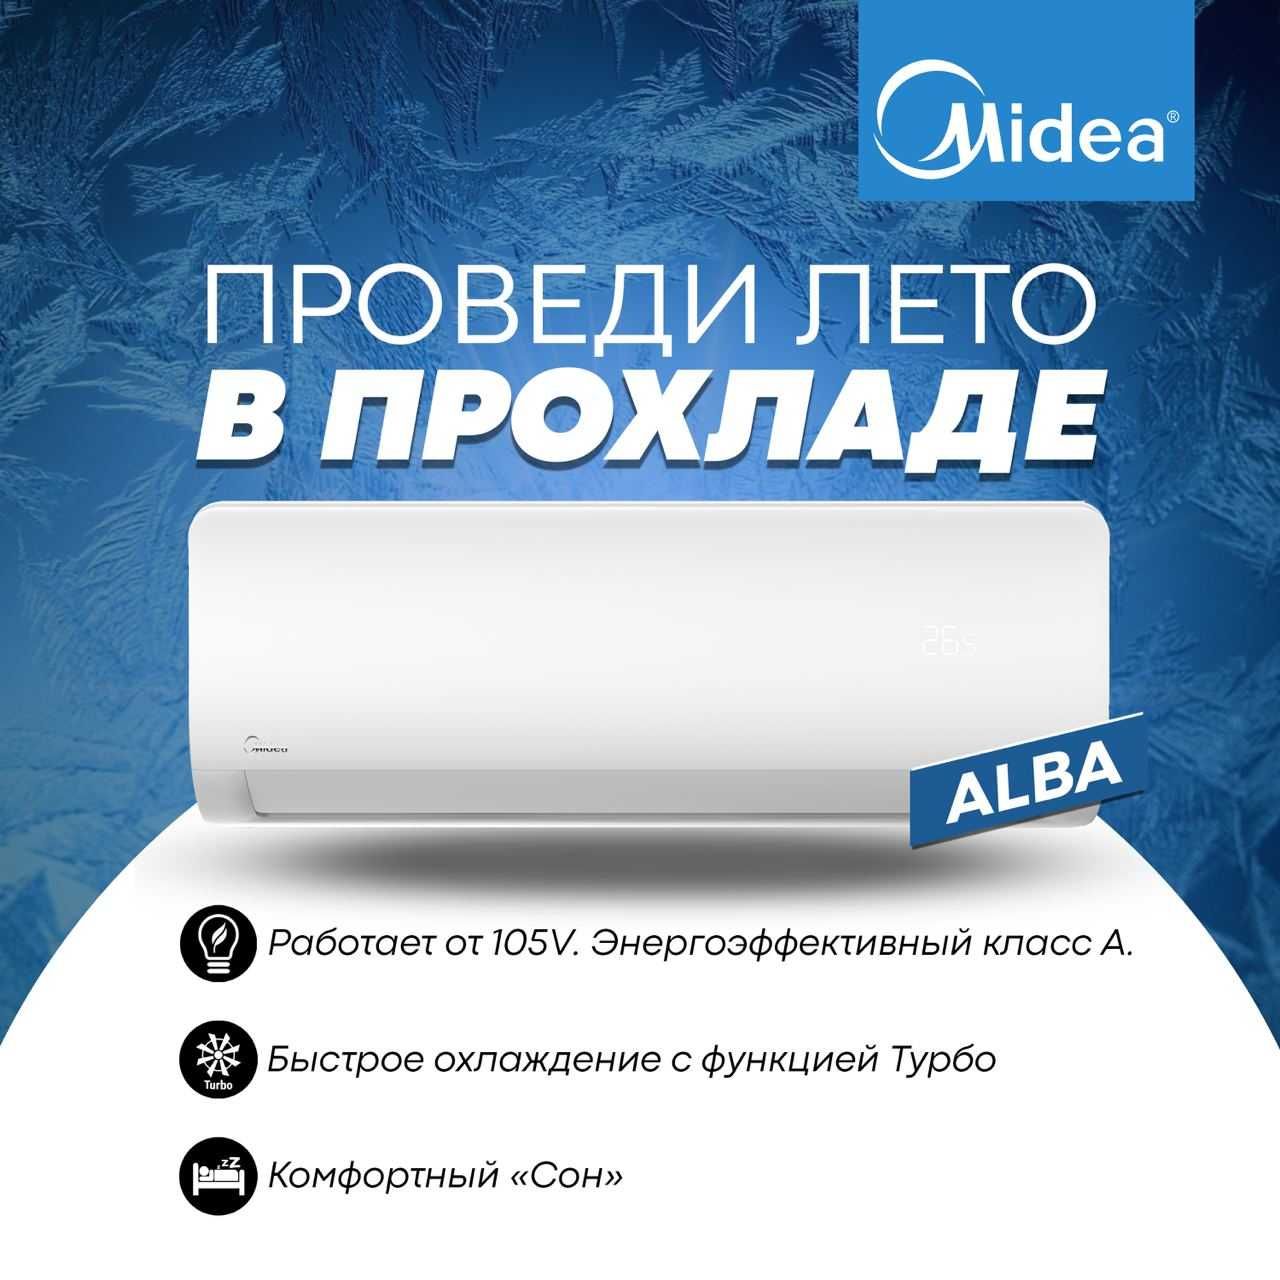 Alba 12 Midea - Inverter / Low voltage 105V-265V